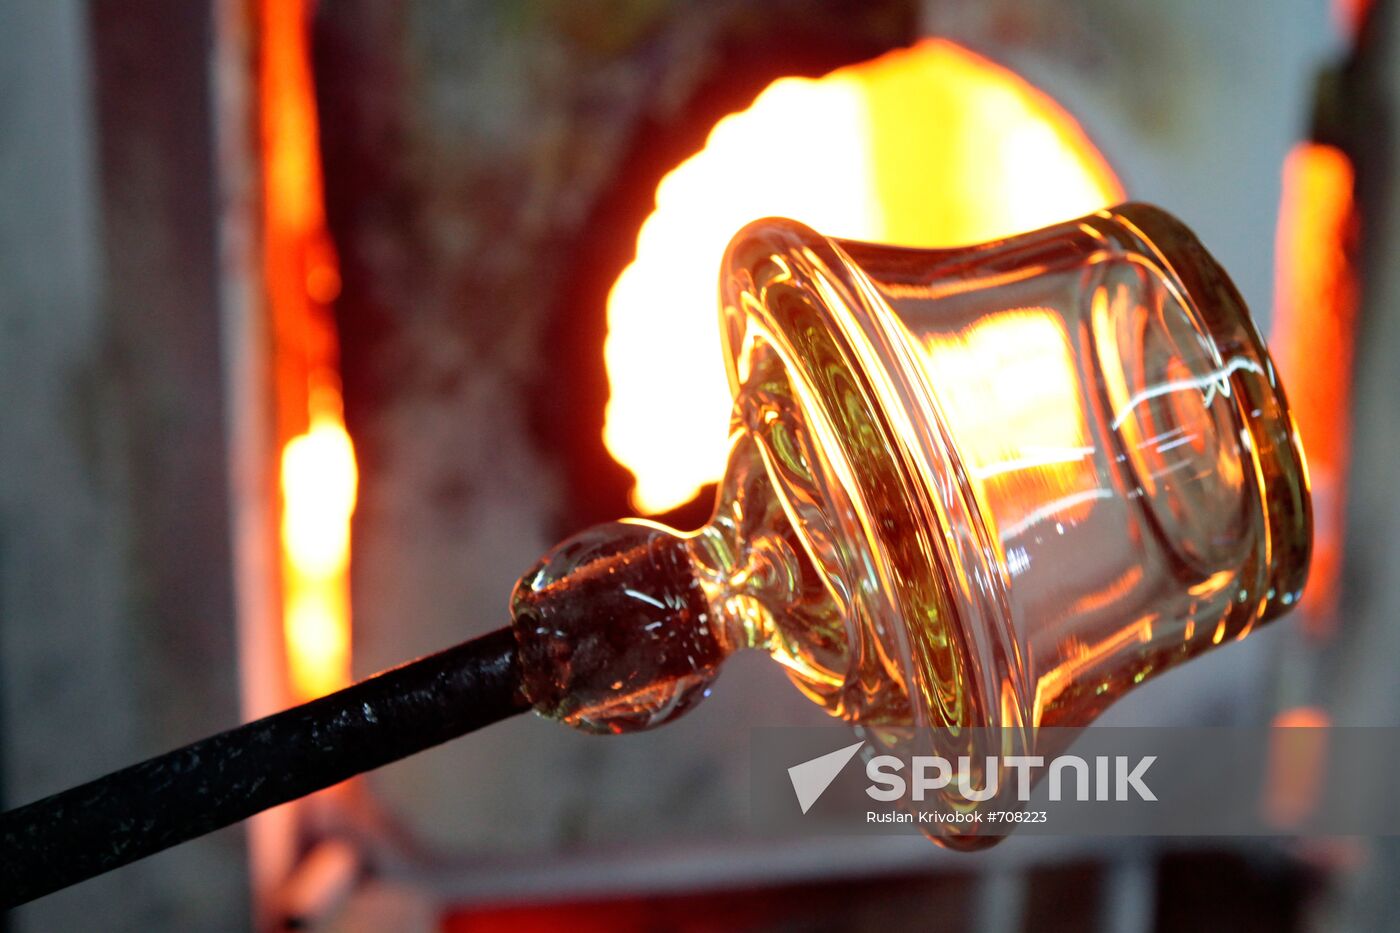 Gusevsky Crystal Glass Plant operations